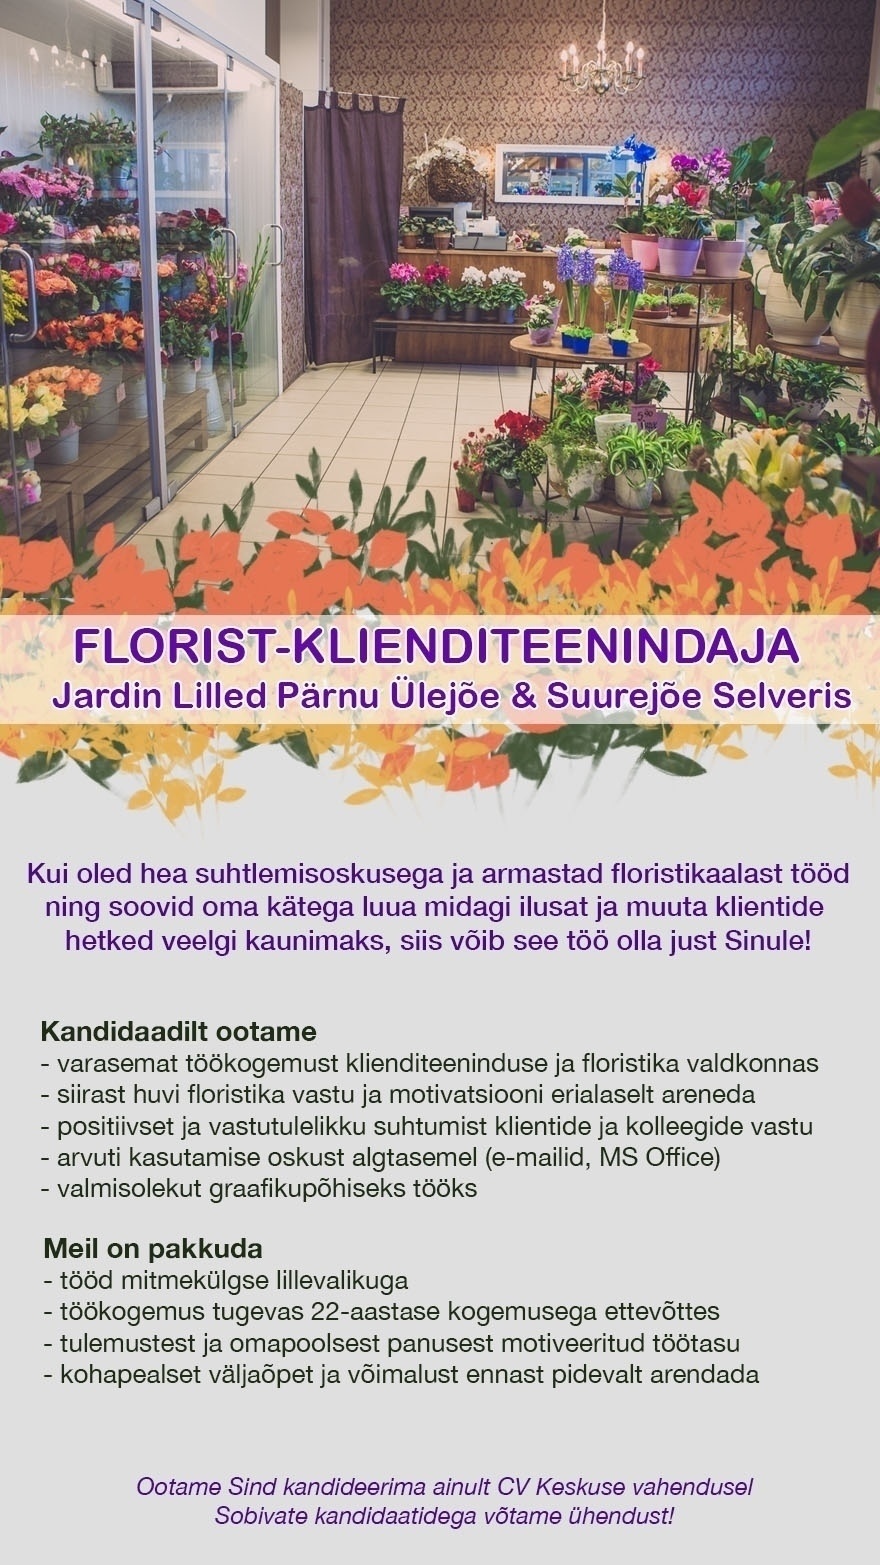 Jardin OÜ Florist-klienditeenindaja Pärnus Ülejõel